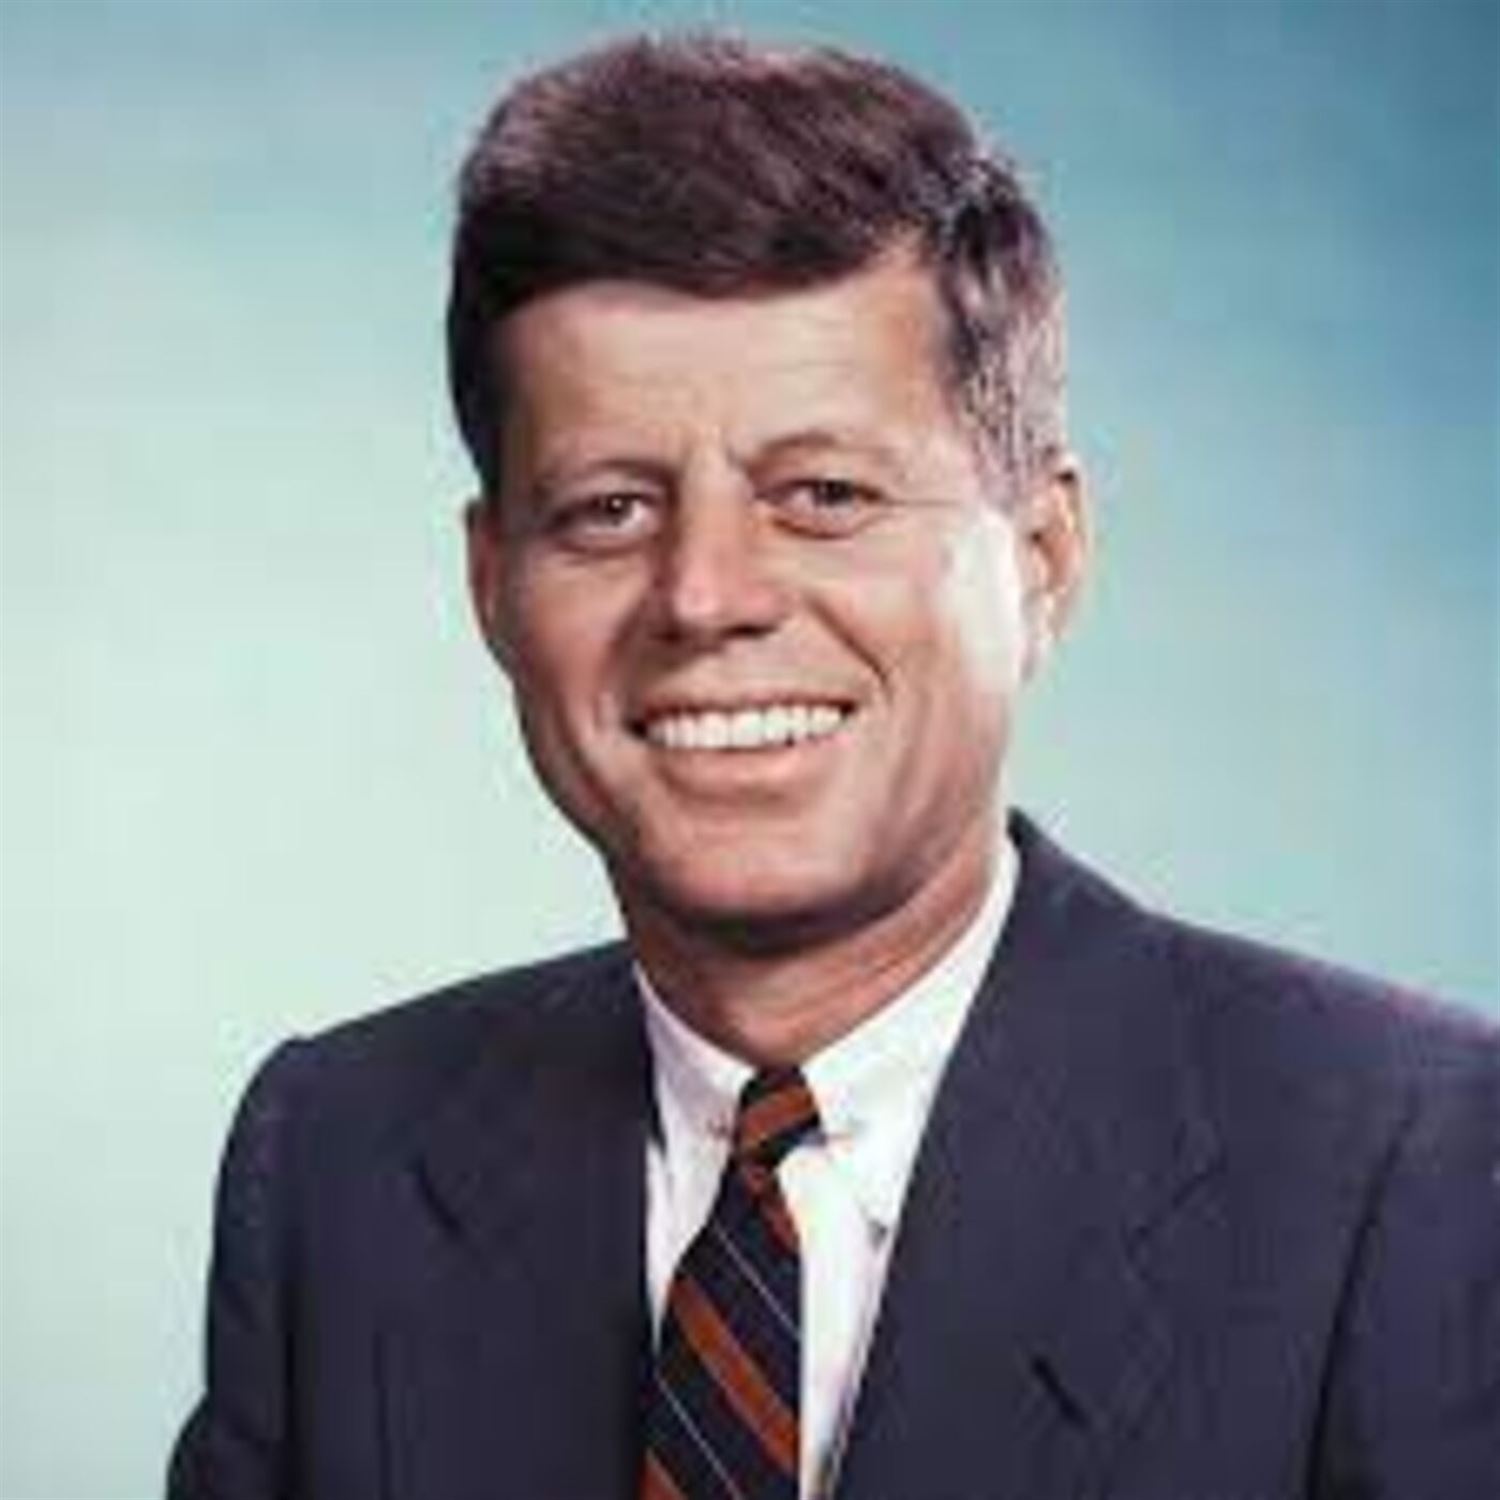 JFK: A calm sex maniac